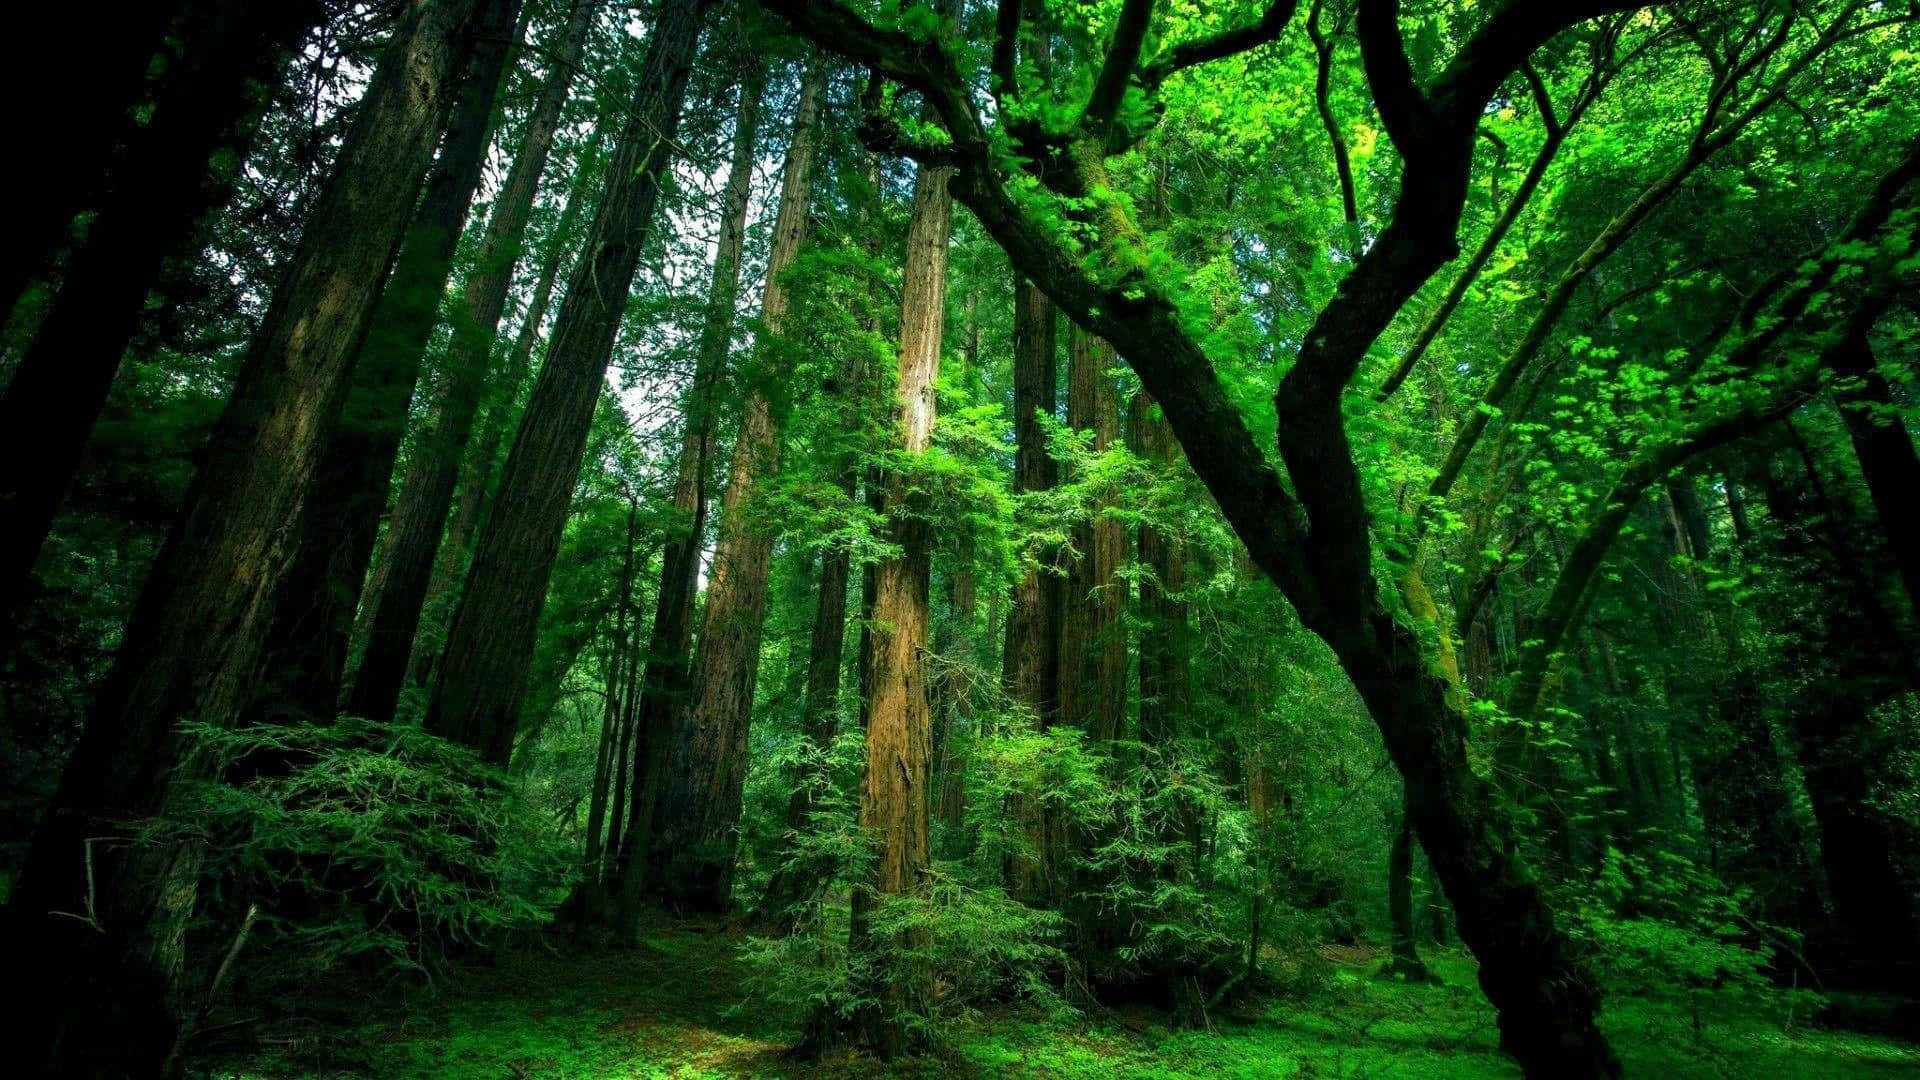 A Lush, Serene Forest